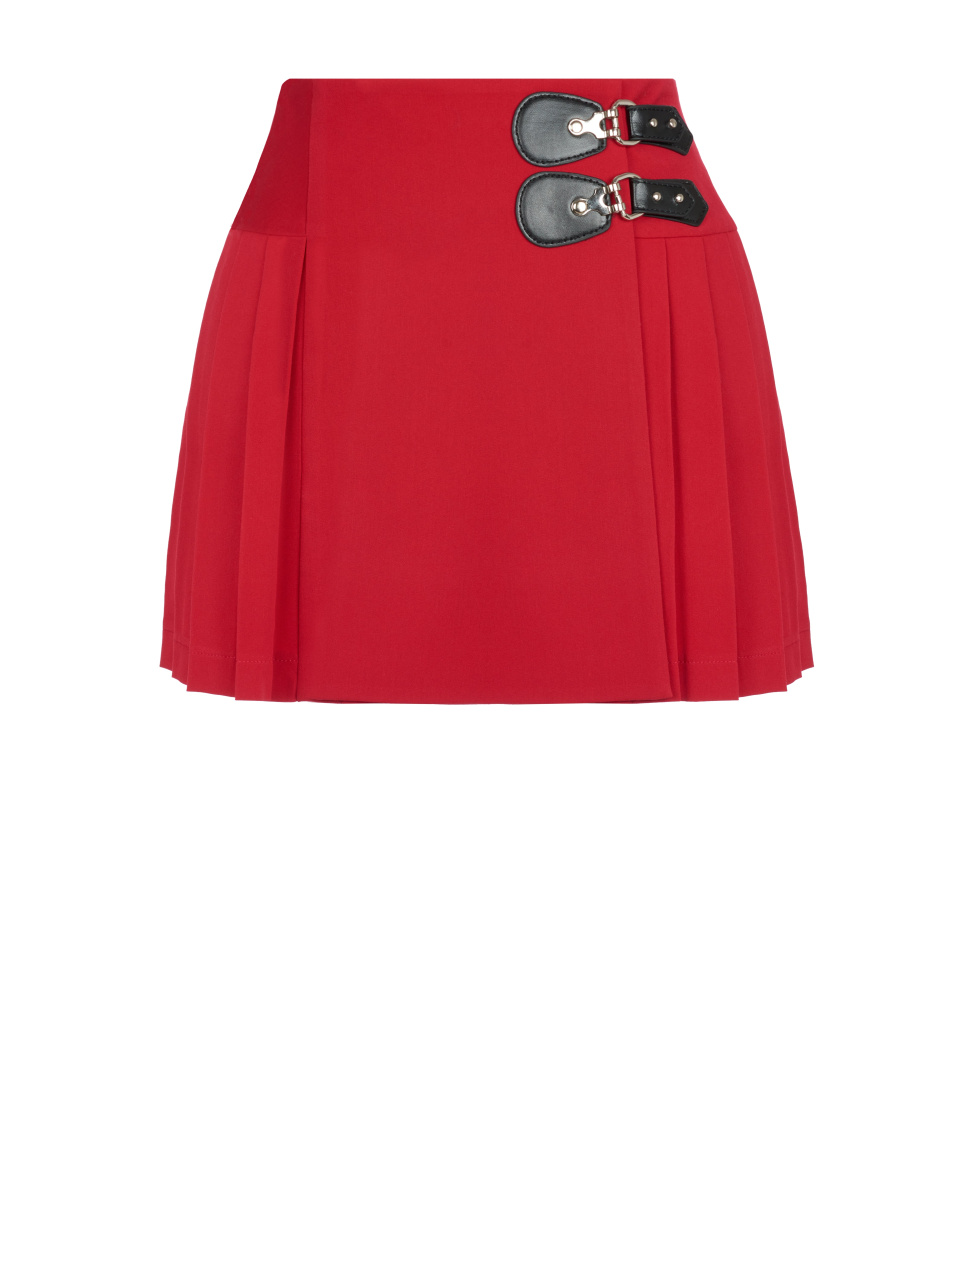 Красная юбка-мини в складку, 1